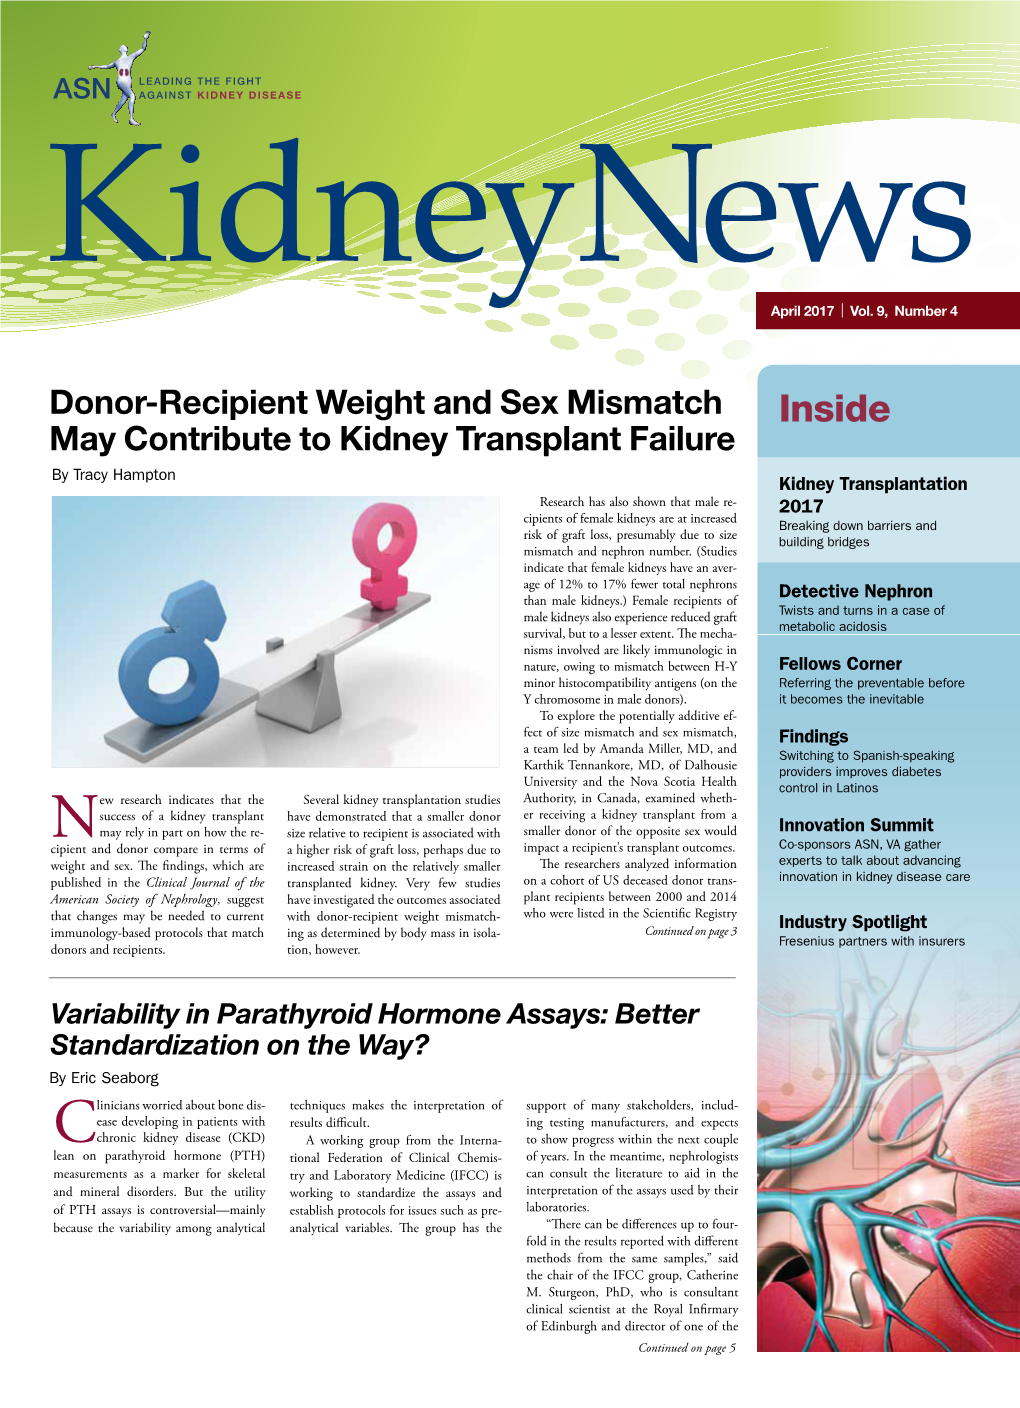 Kidney News | 3